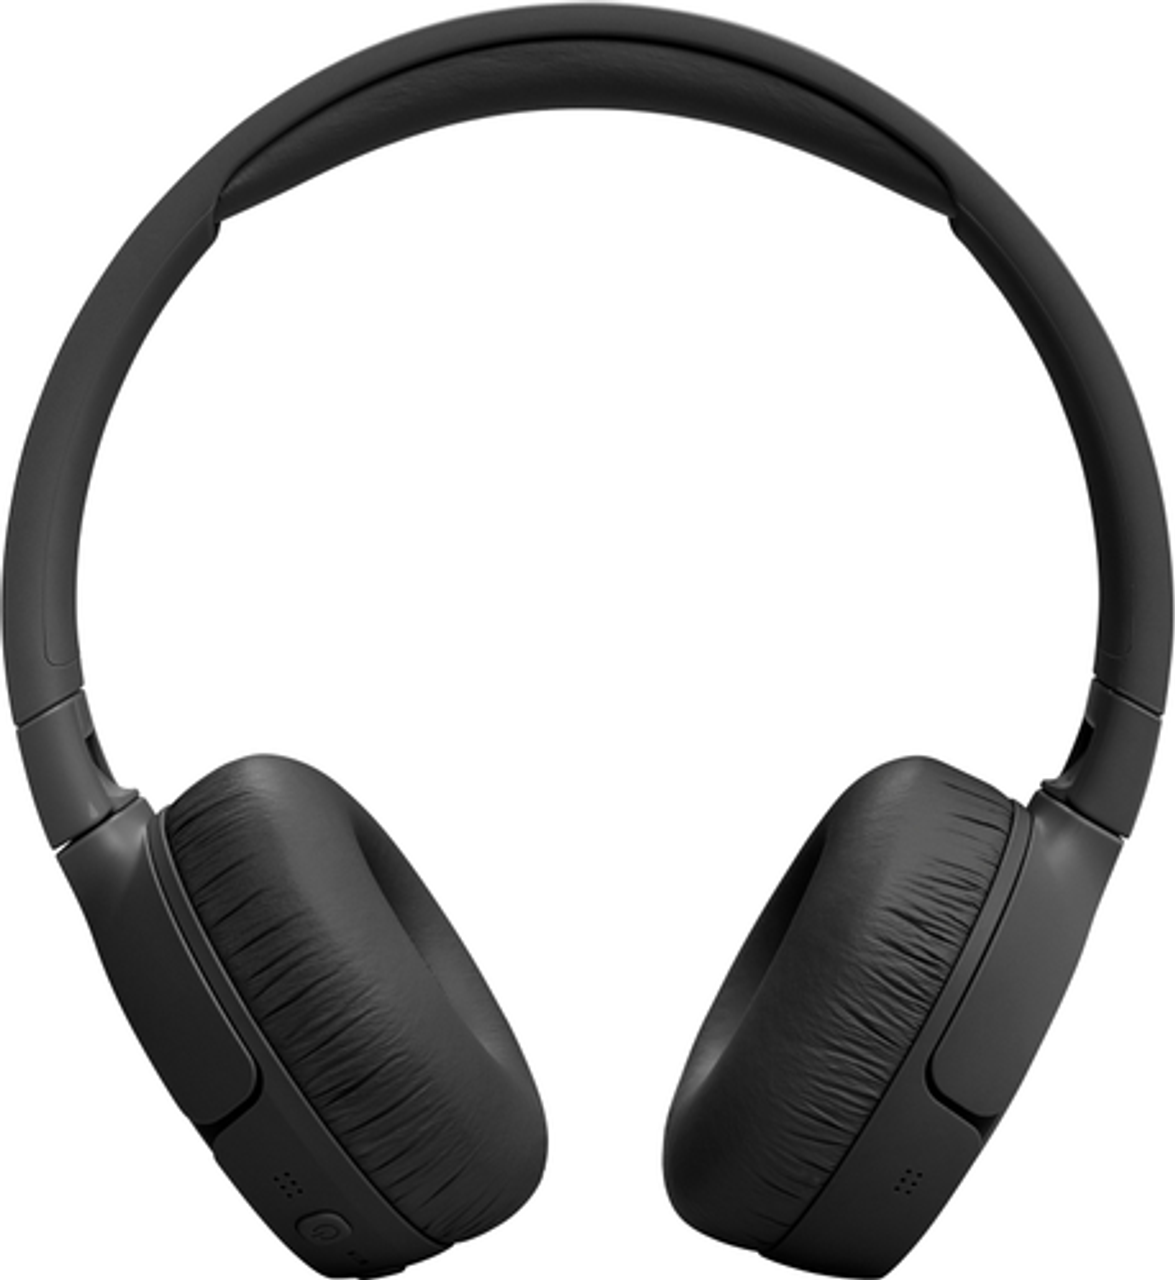 JBL - Adaptive Noise Cancelling Wireless On-Ear Headphone - Black